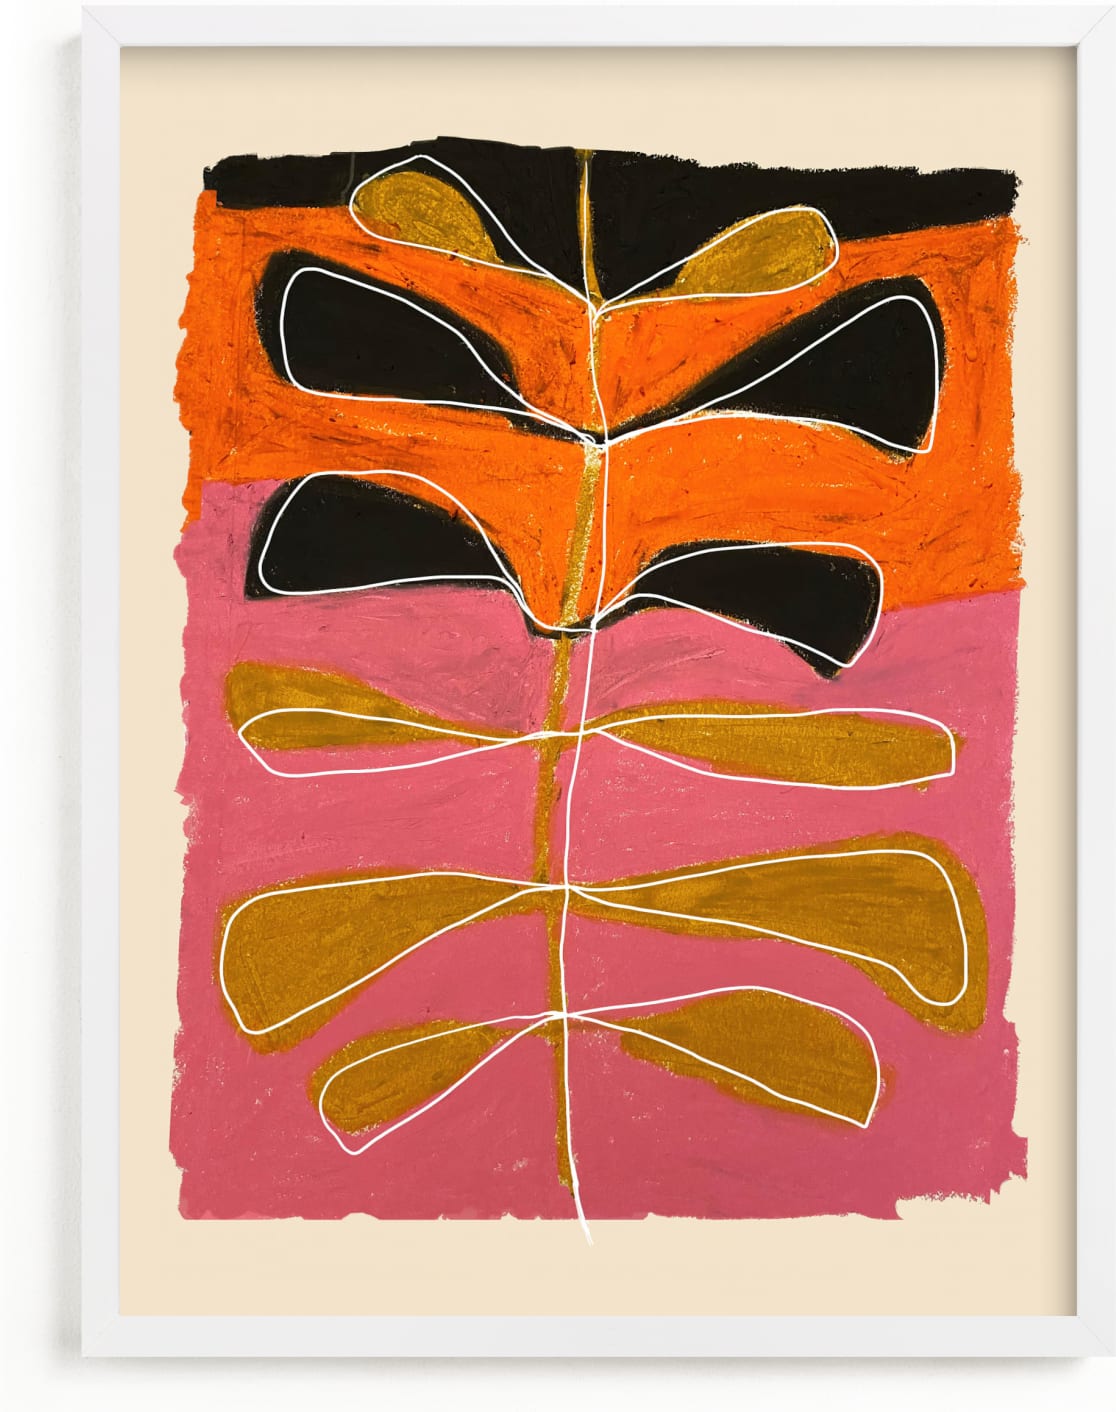 This is a pink, black, orange art by Deborah Velasquez called Underground Opera.